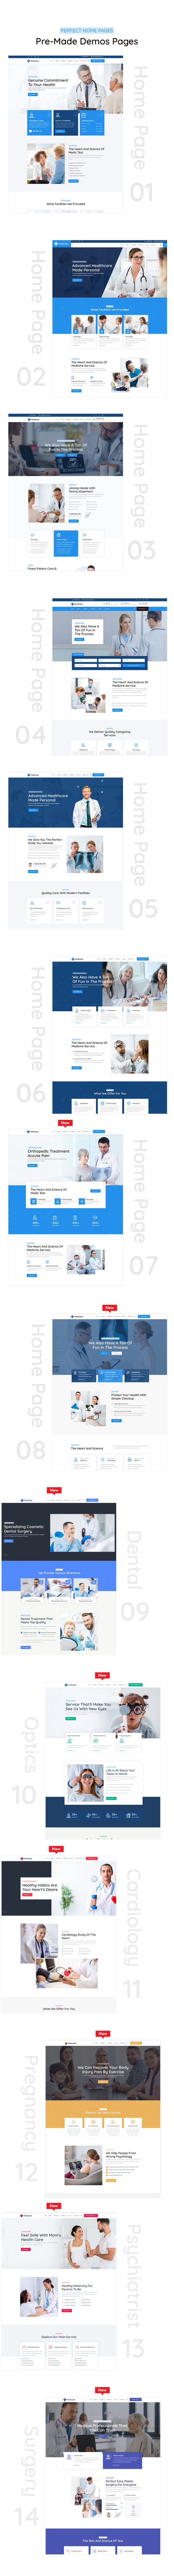 Medicate – Health & Medical WordPress Theme + RTL Ready - 3